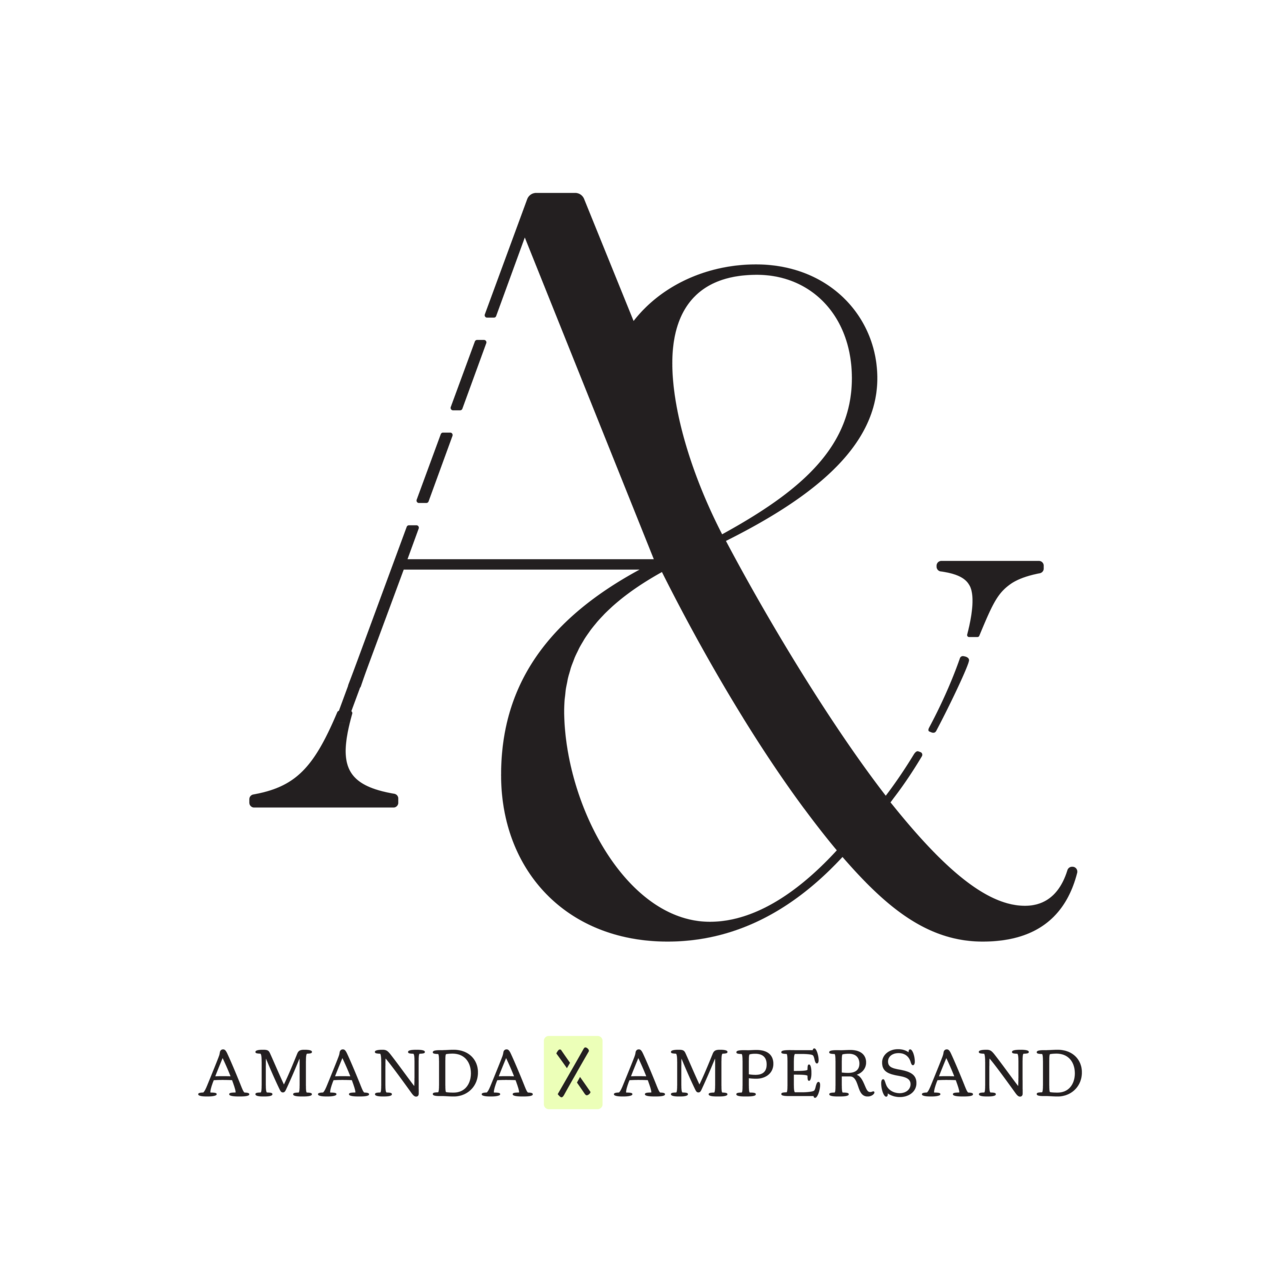 Amanda x Ampersand